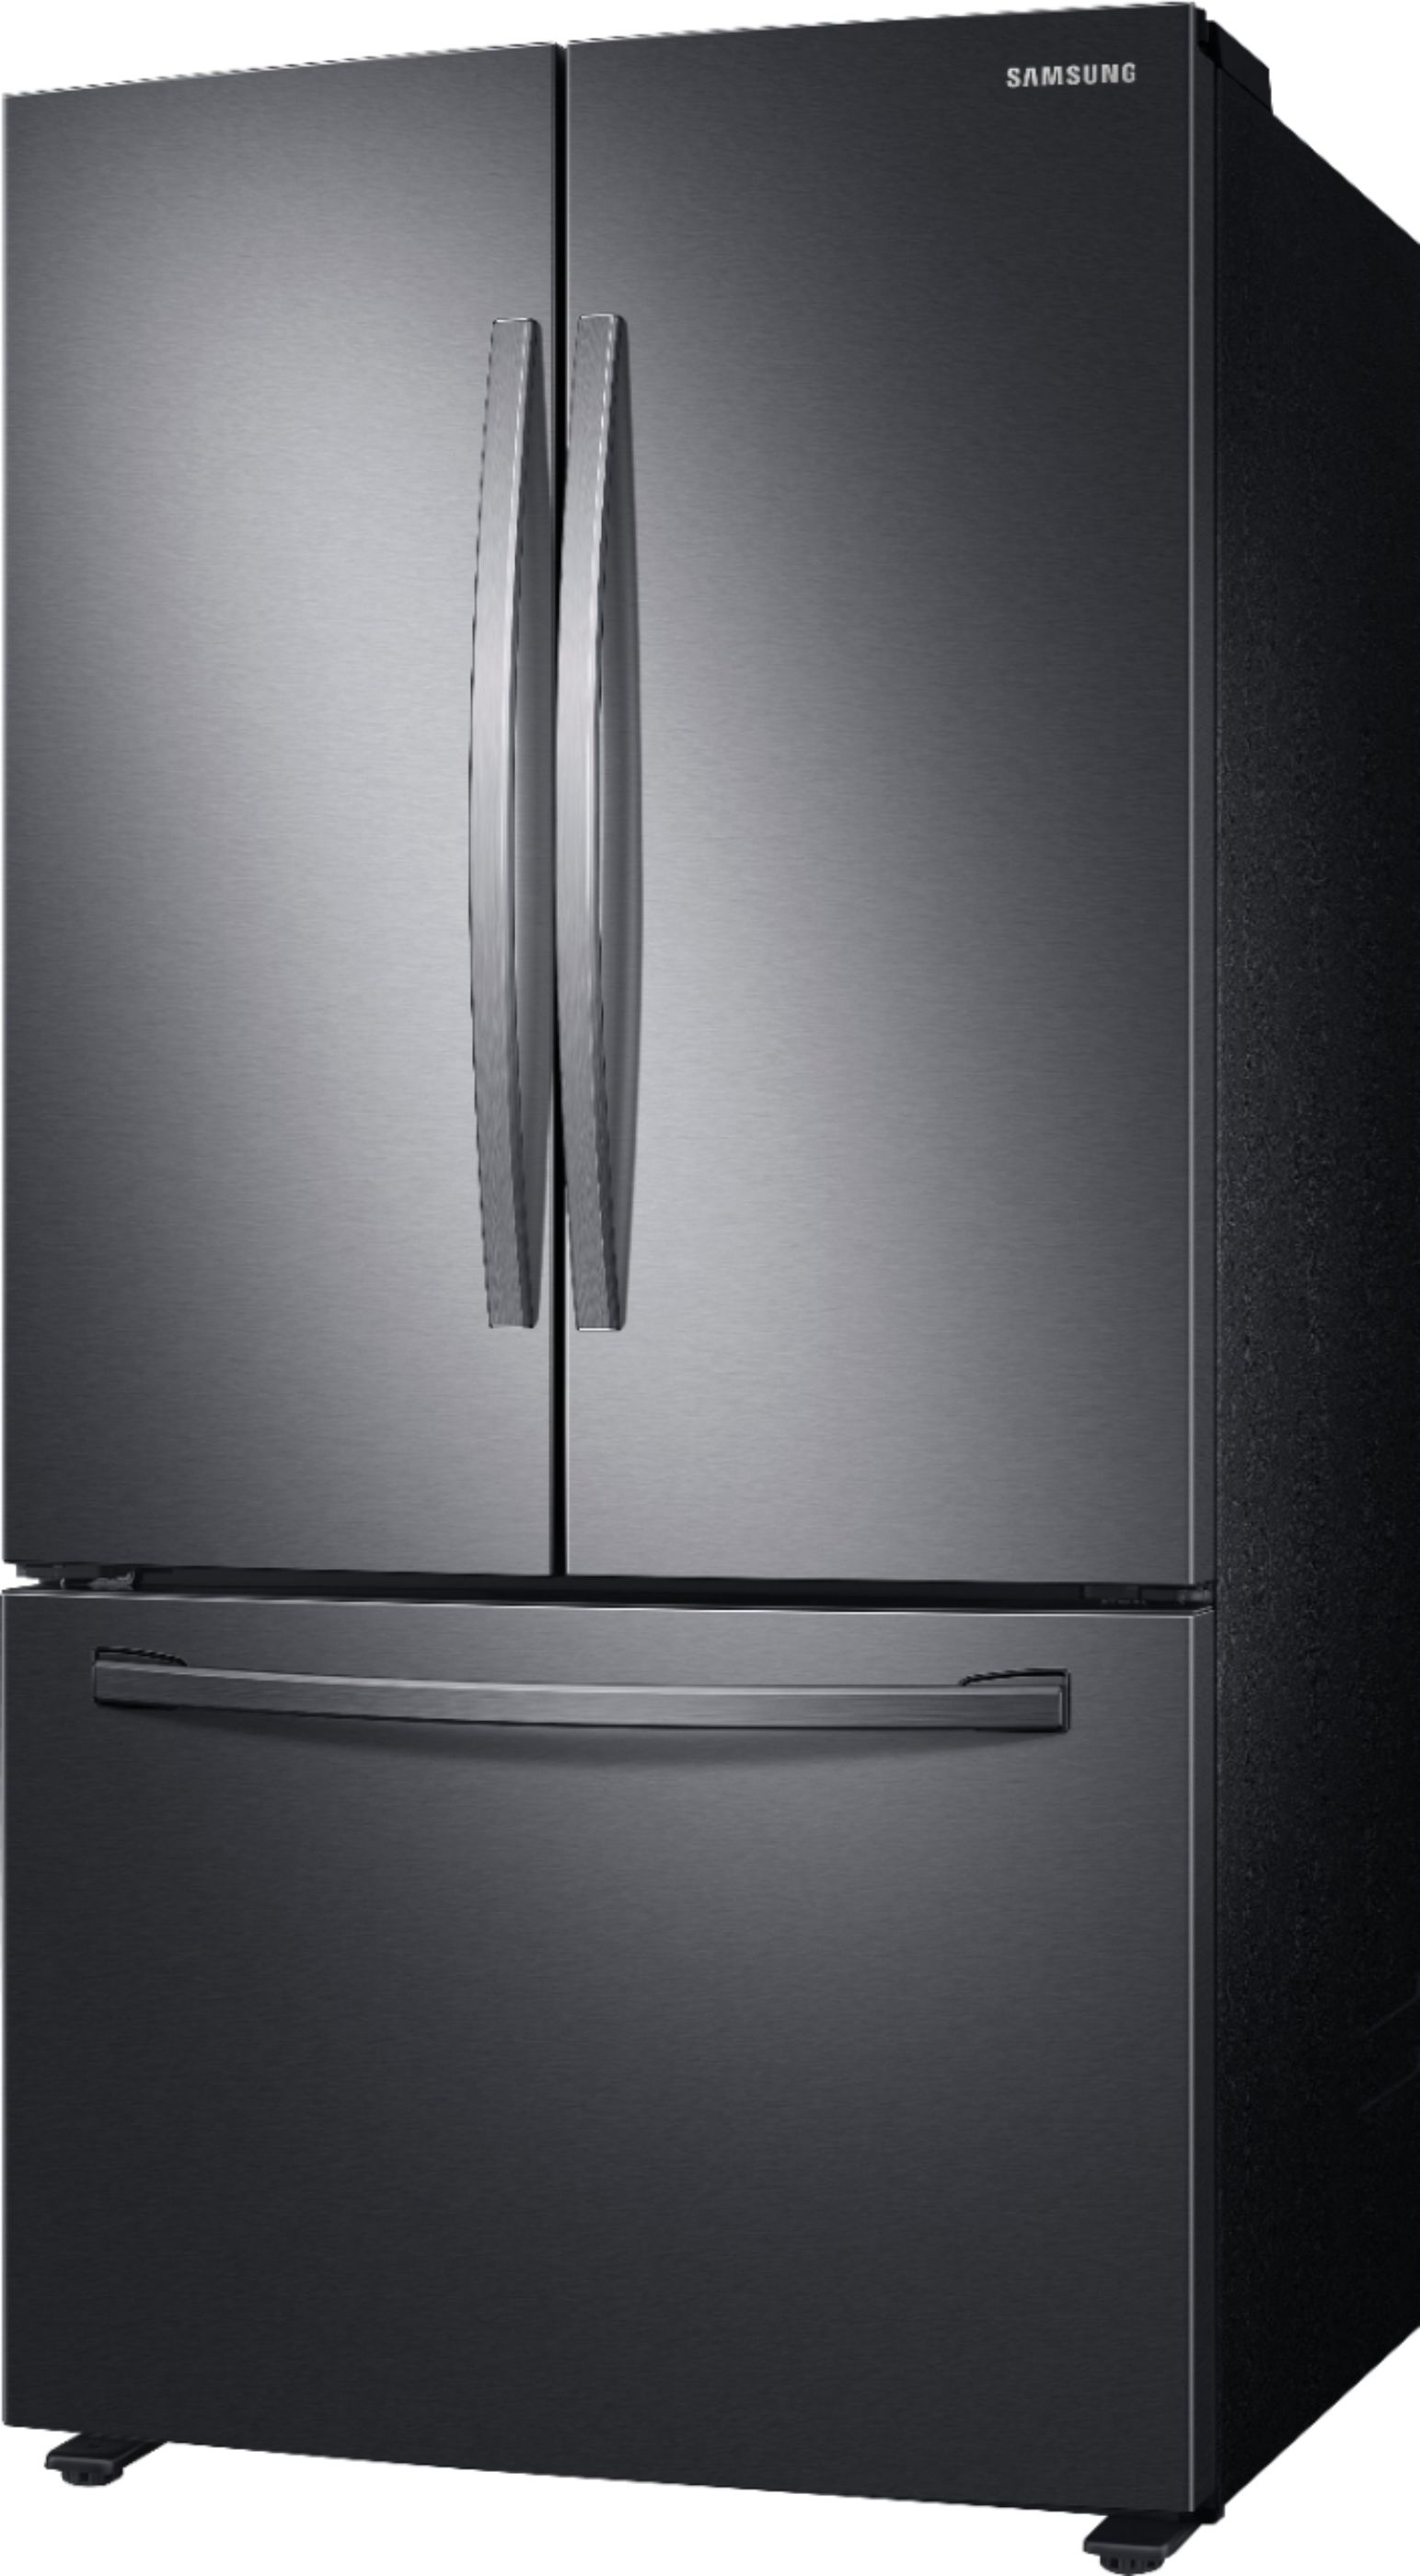 Left View: Samsung - 28 cu. ft. 3-Door French Door Refrigerator with Large Capacity - Black Stainless Steel